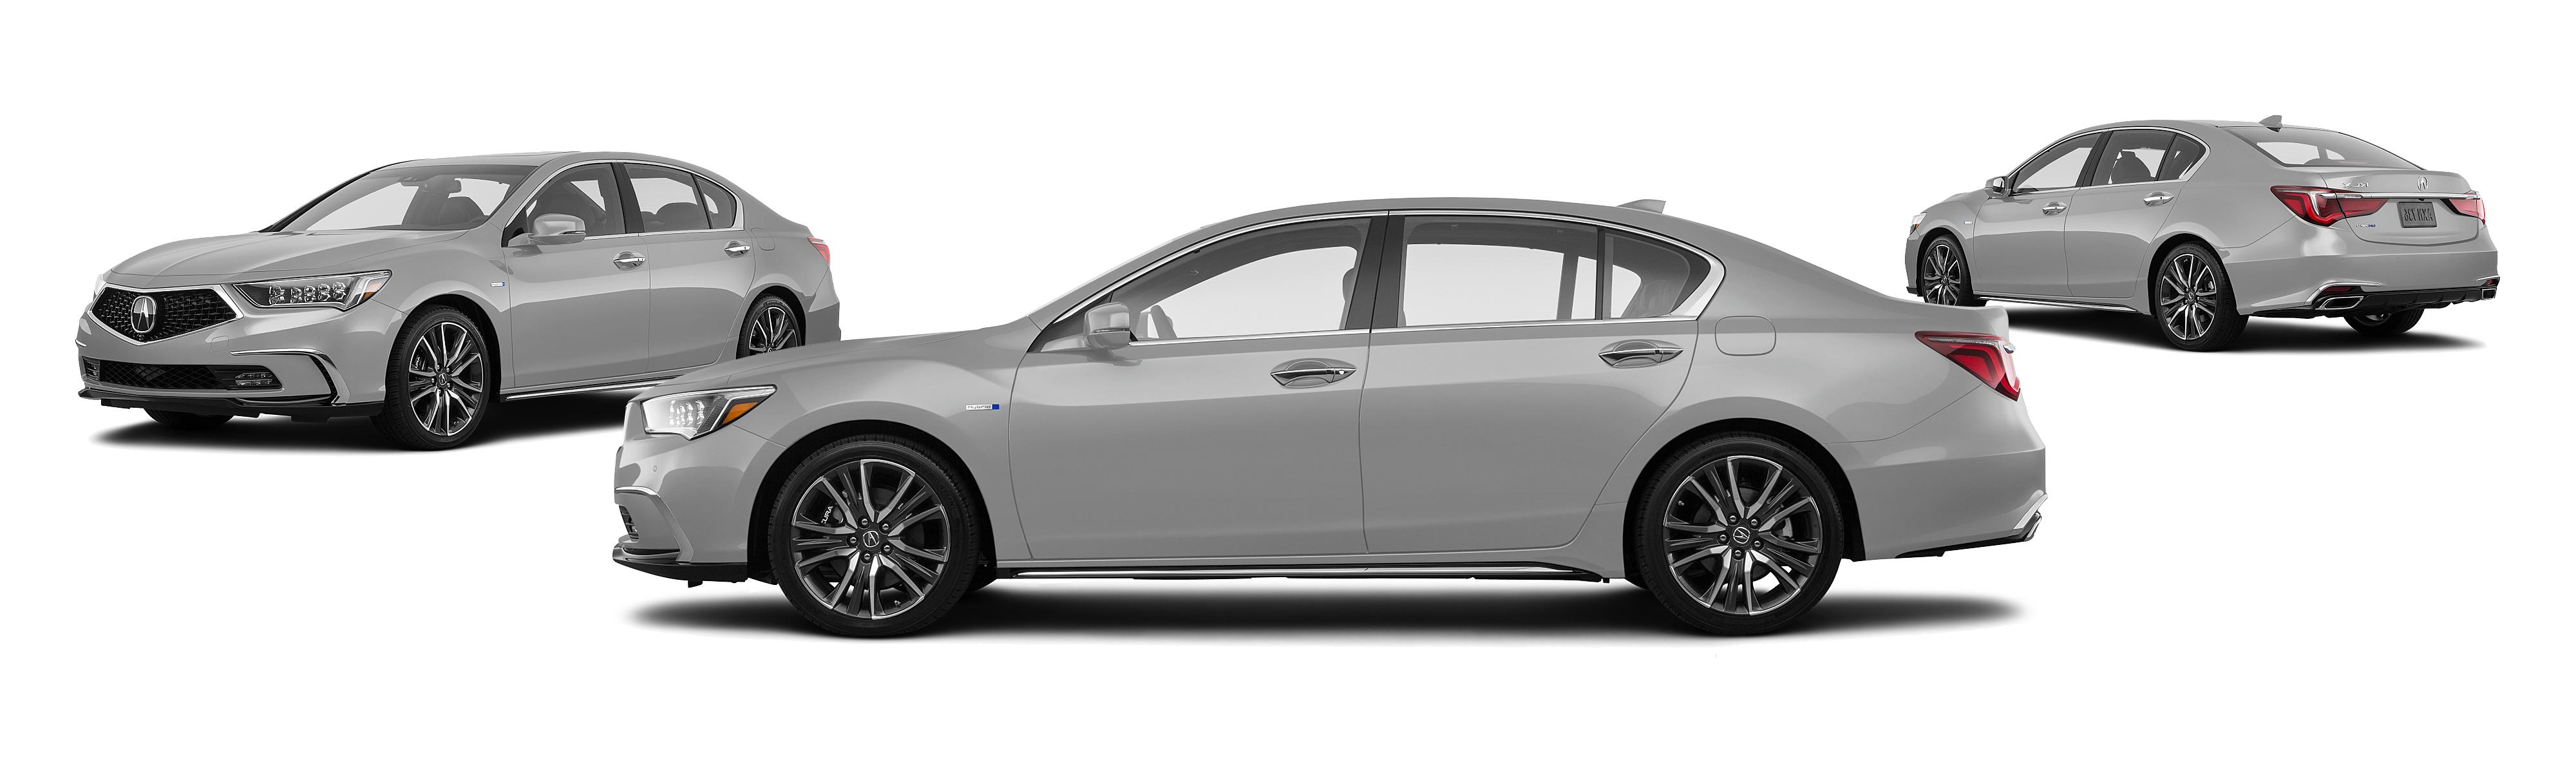 2020 Acura RLX SH-AWD Sport Hybrid 4dr Sedan w/Advance Package - Research -  GrooveCar